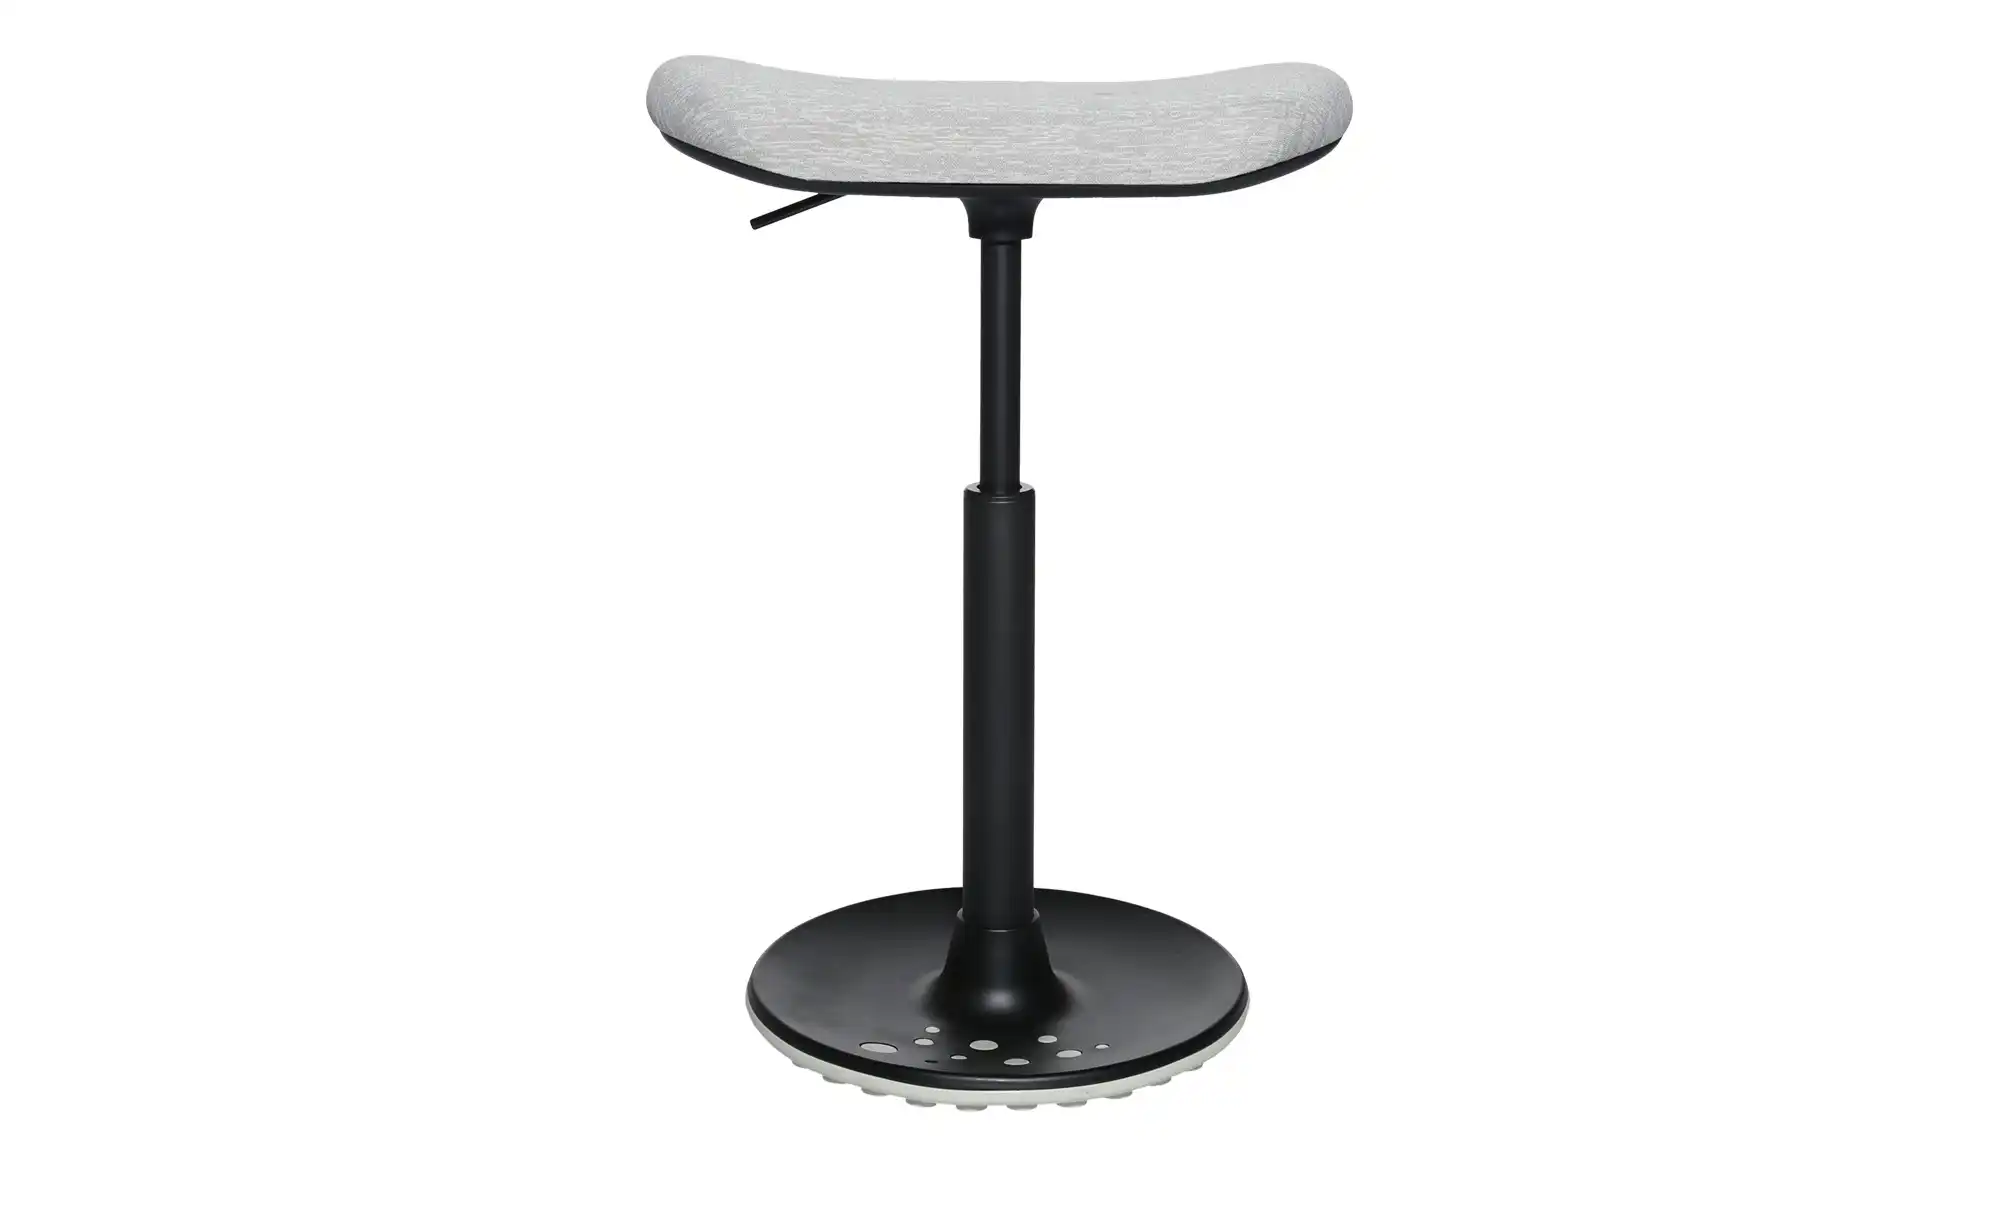 Hocker Sitness UP 2 ¦ grau Stühle Bürostühle Drehstühle Höffner  - Onlineshop Möbel Höffner